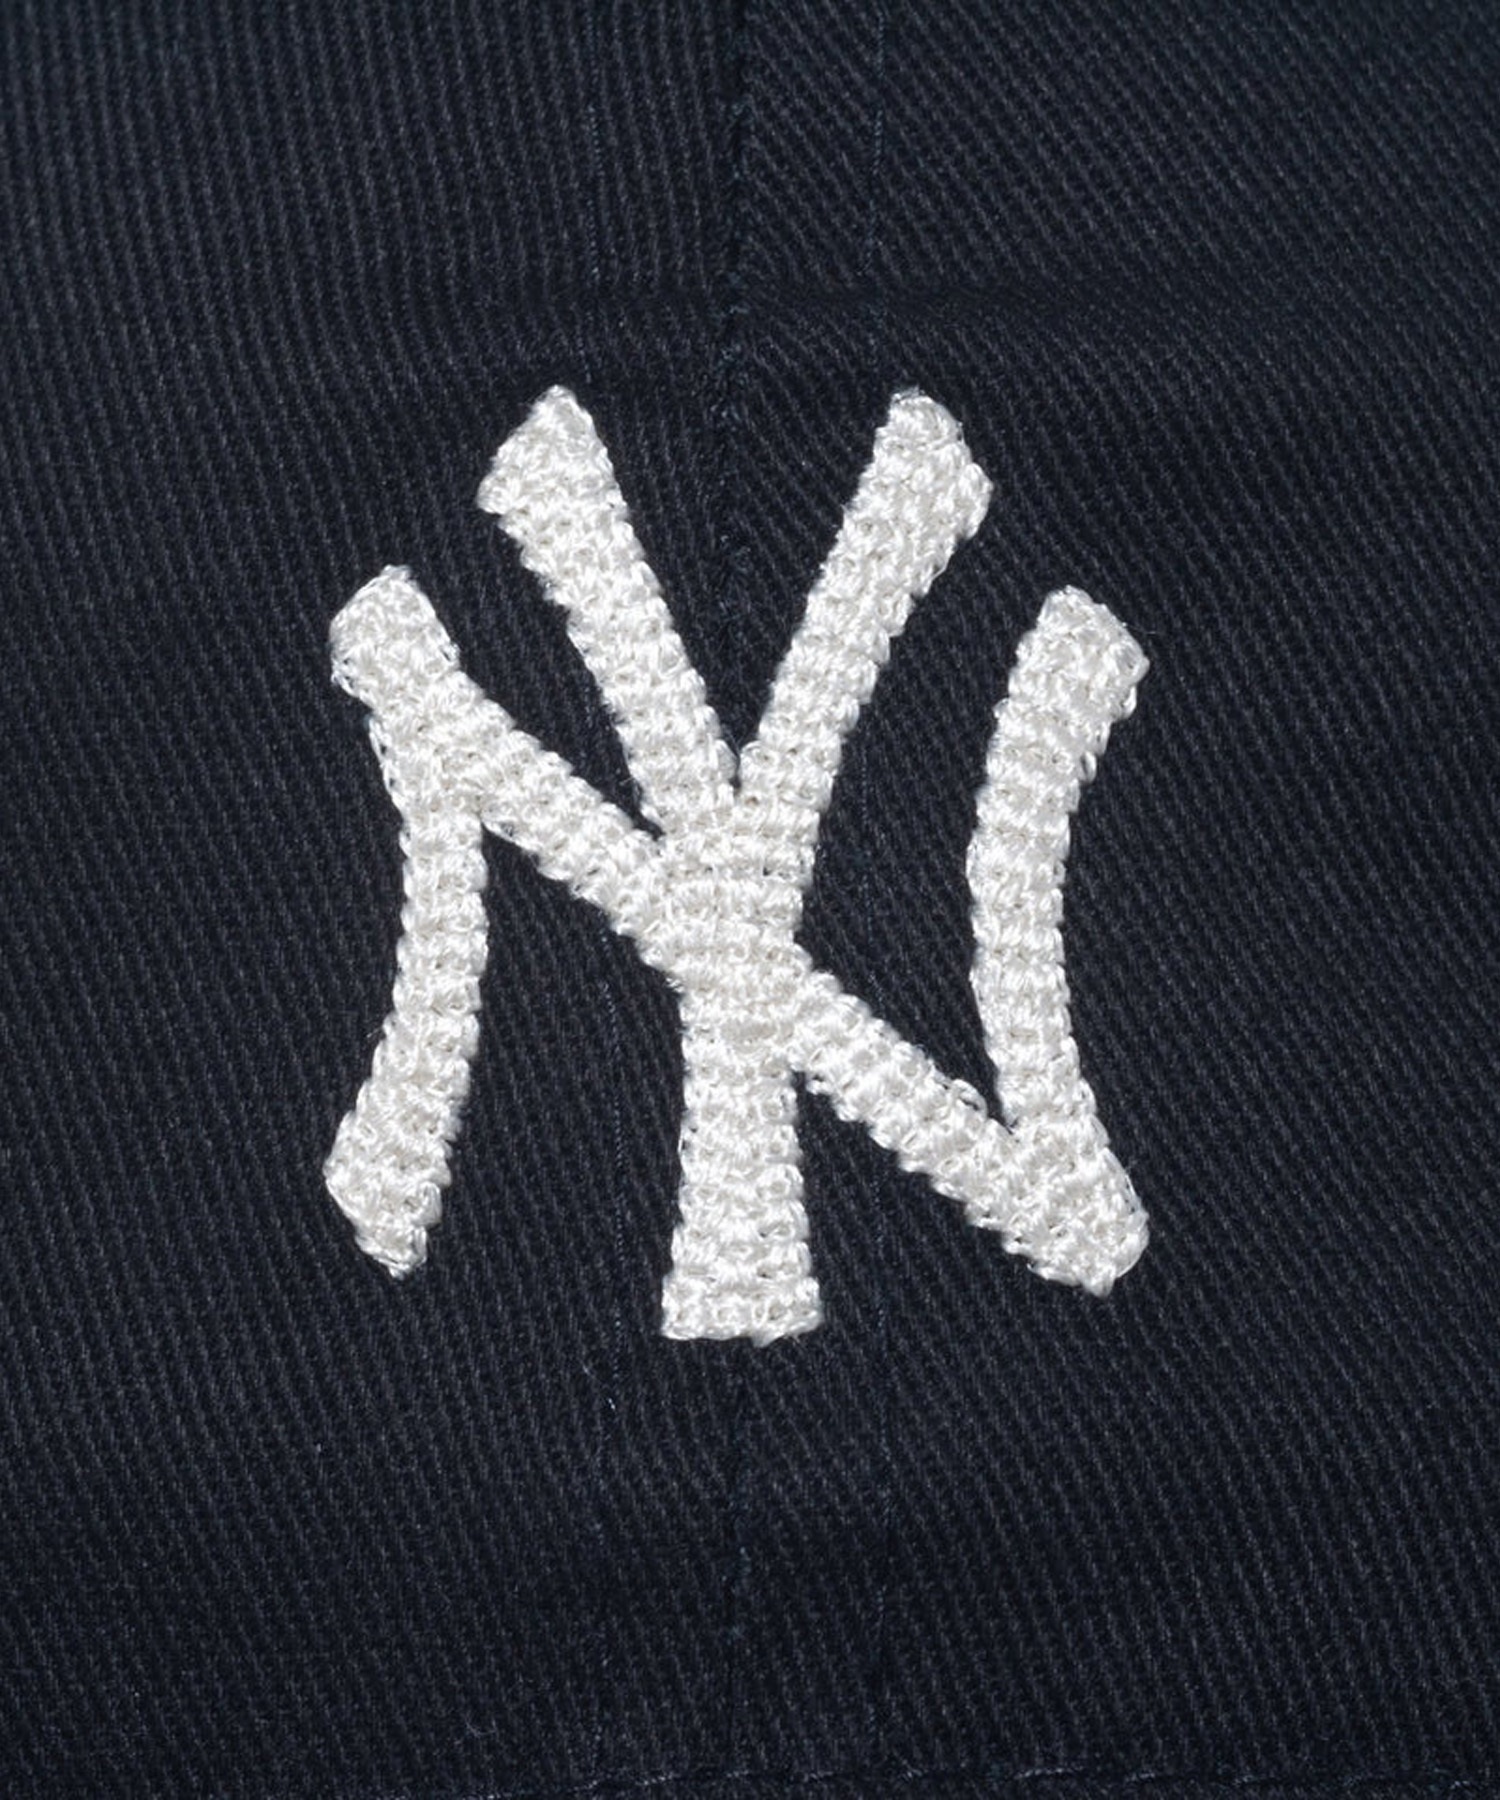 NEW ERA/ニューエラ 9TWENTY MLB Chain Stitch ニューヨーク・ヤンキース ブラック キャップ 帽子  13751073(BLK-ONESIZE)